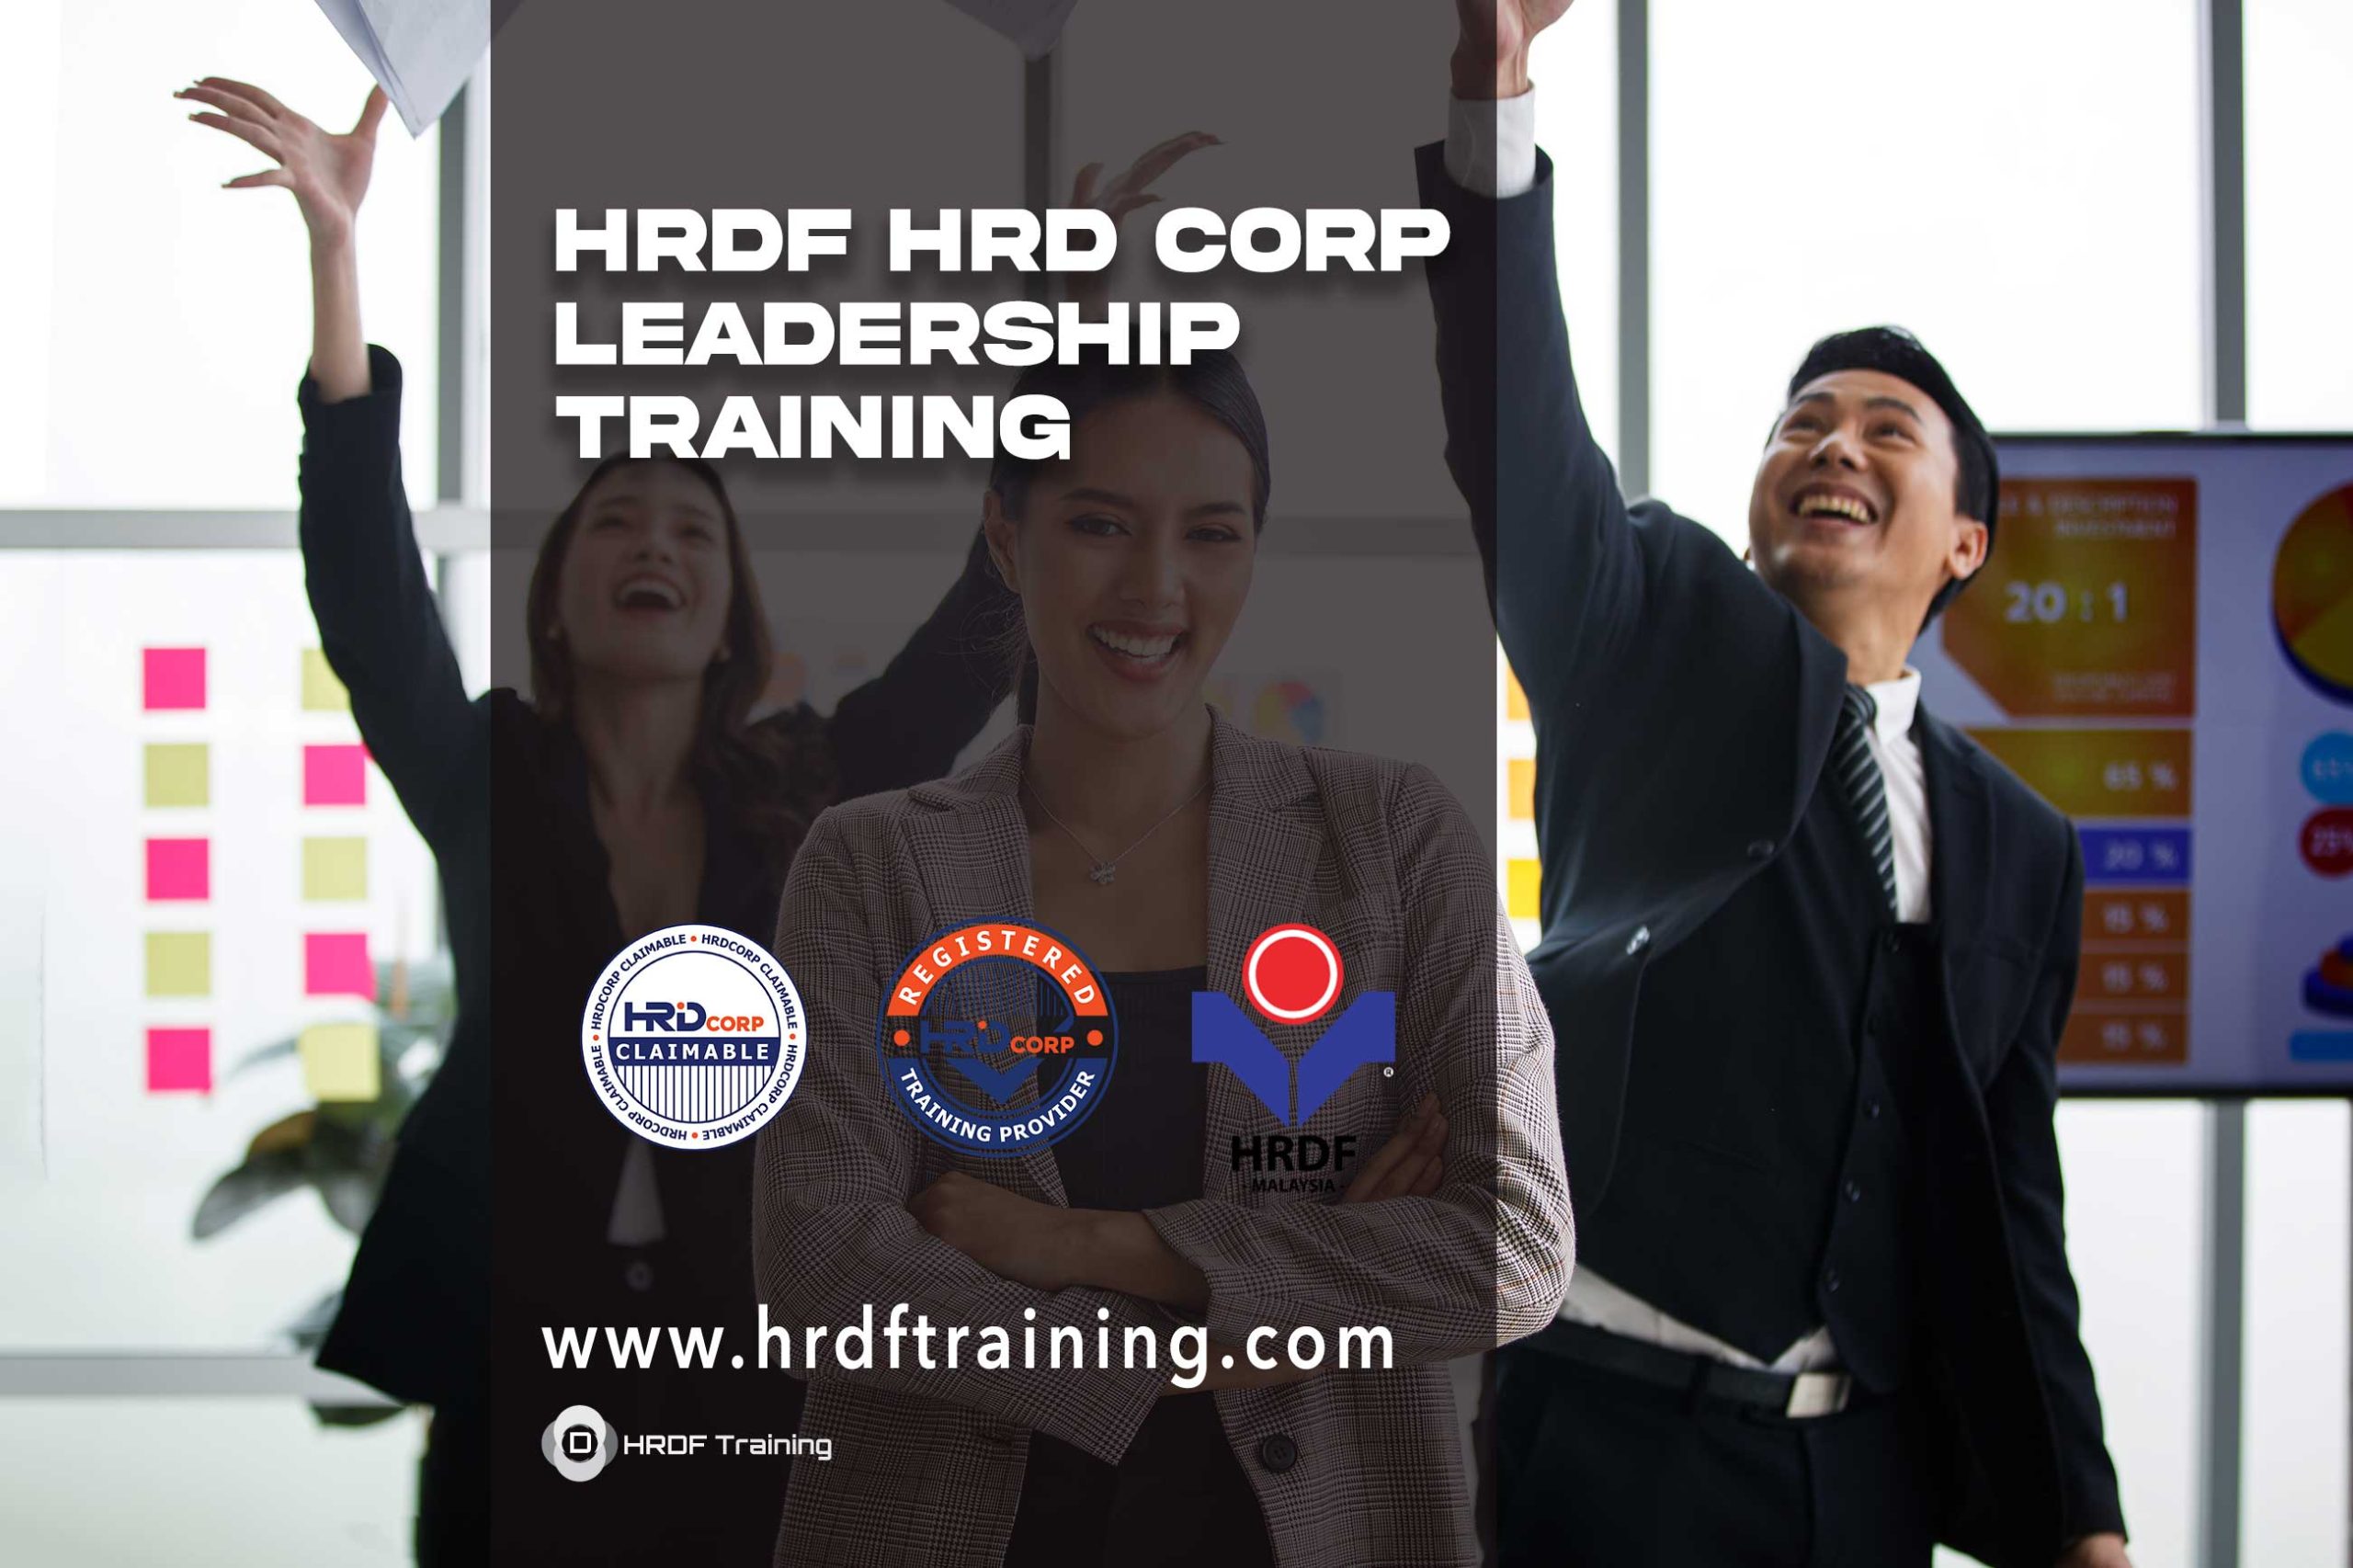 HRDF HRD Corp Leadership Training